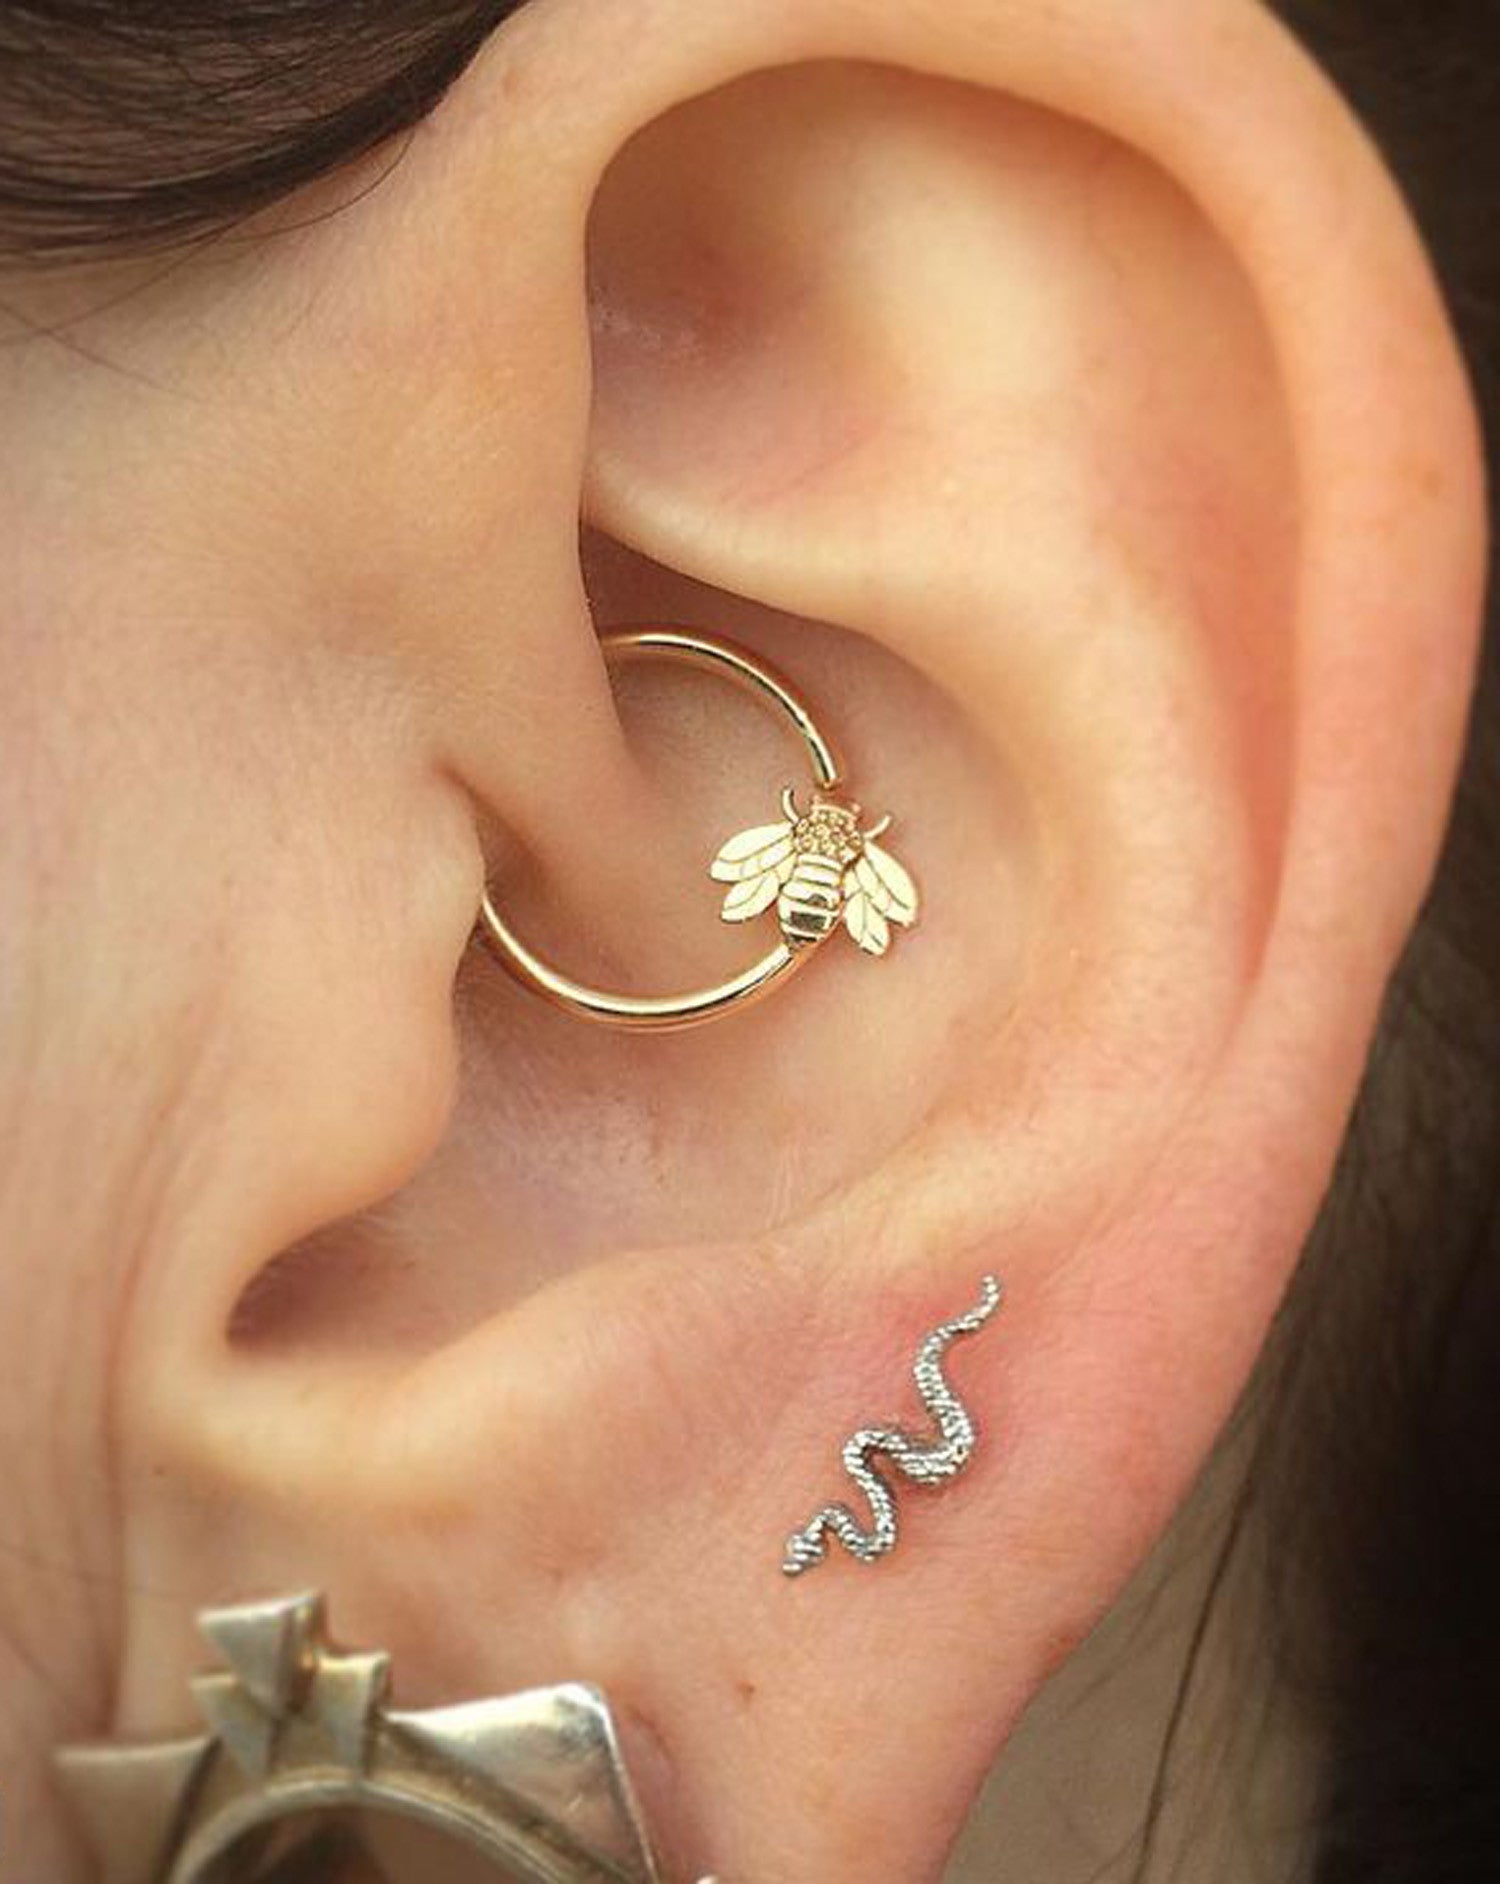 Ear Piercing Inspiration - Beautiful Bee Tragus Hoop - Snake Earring - Cute Earrings - MyBodiArt.com 